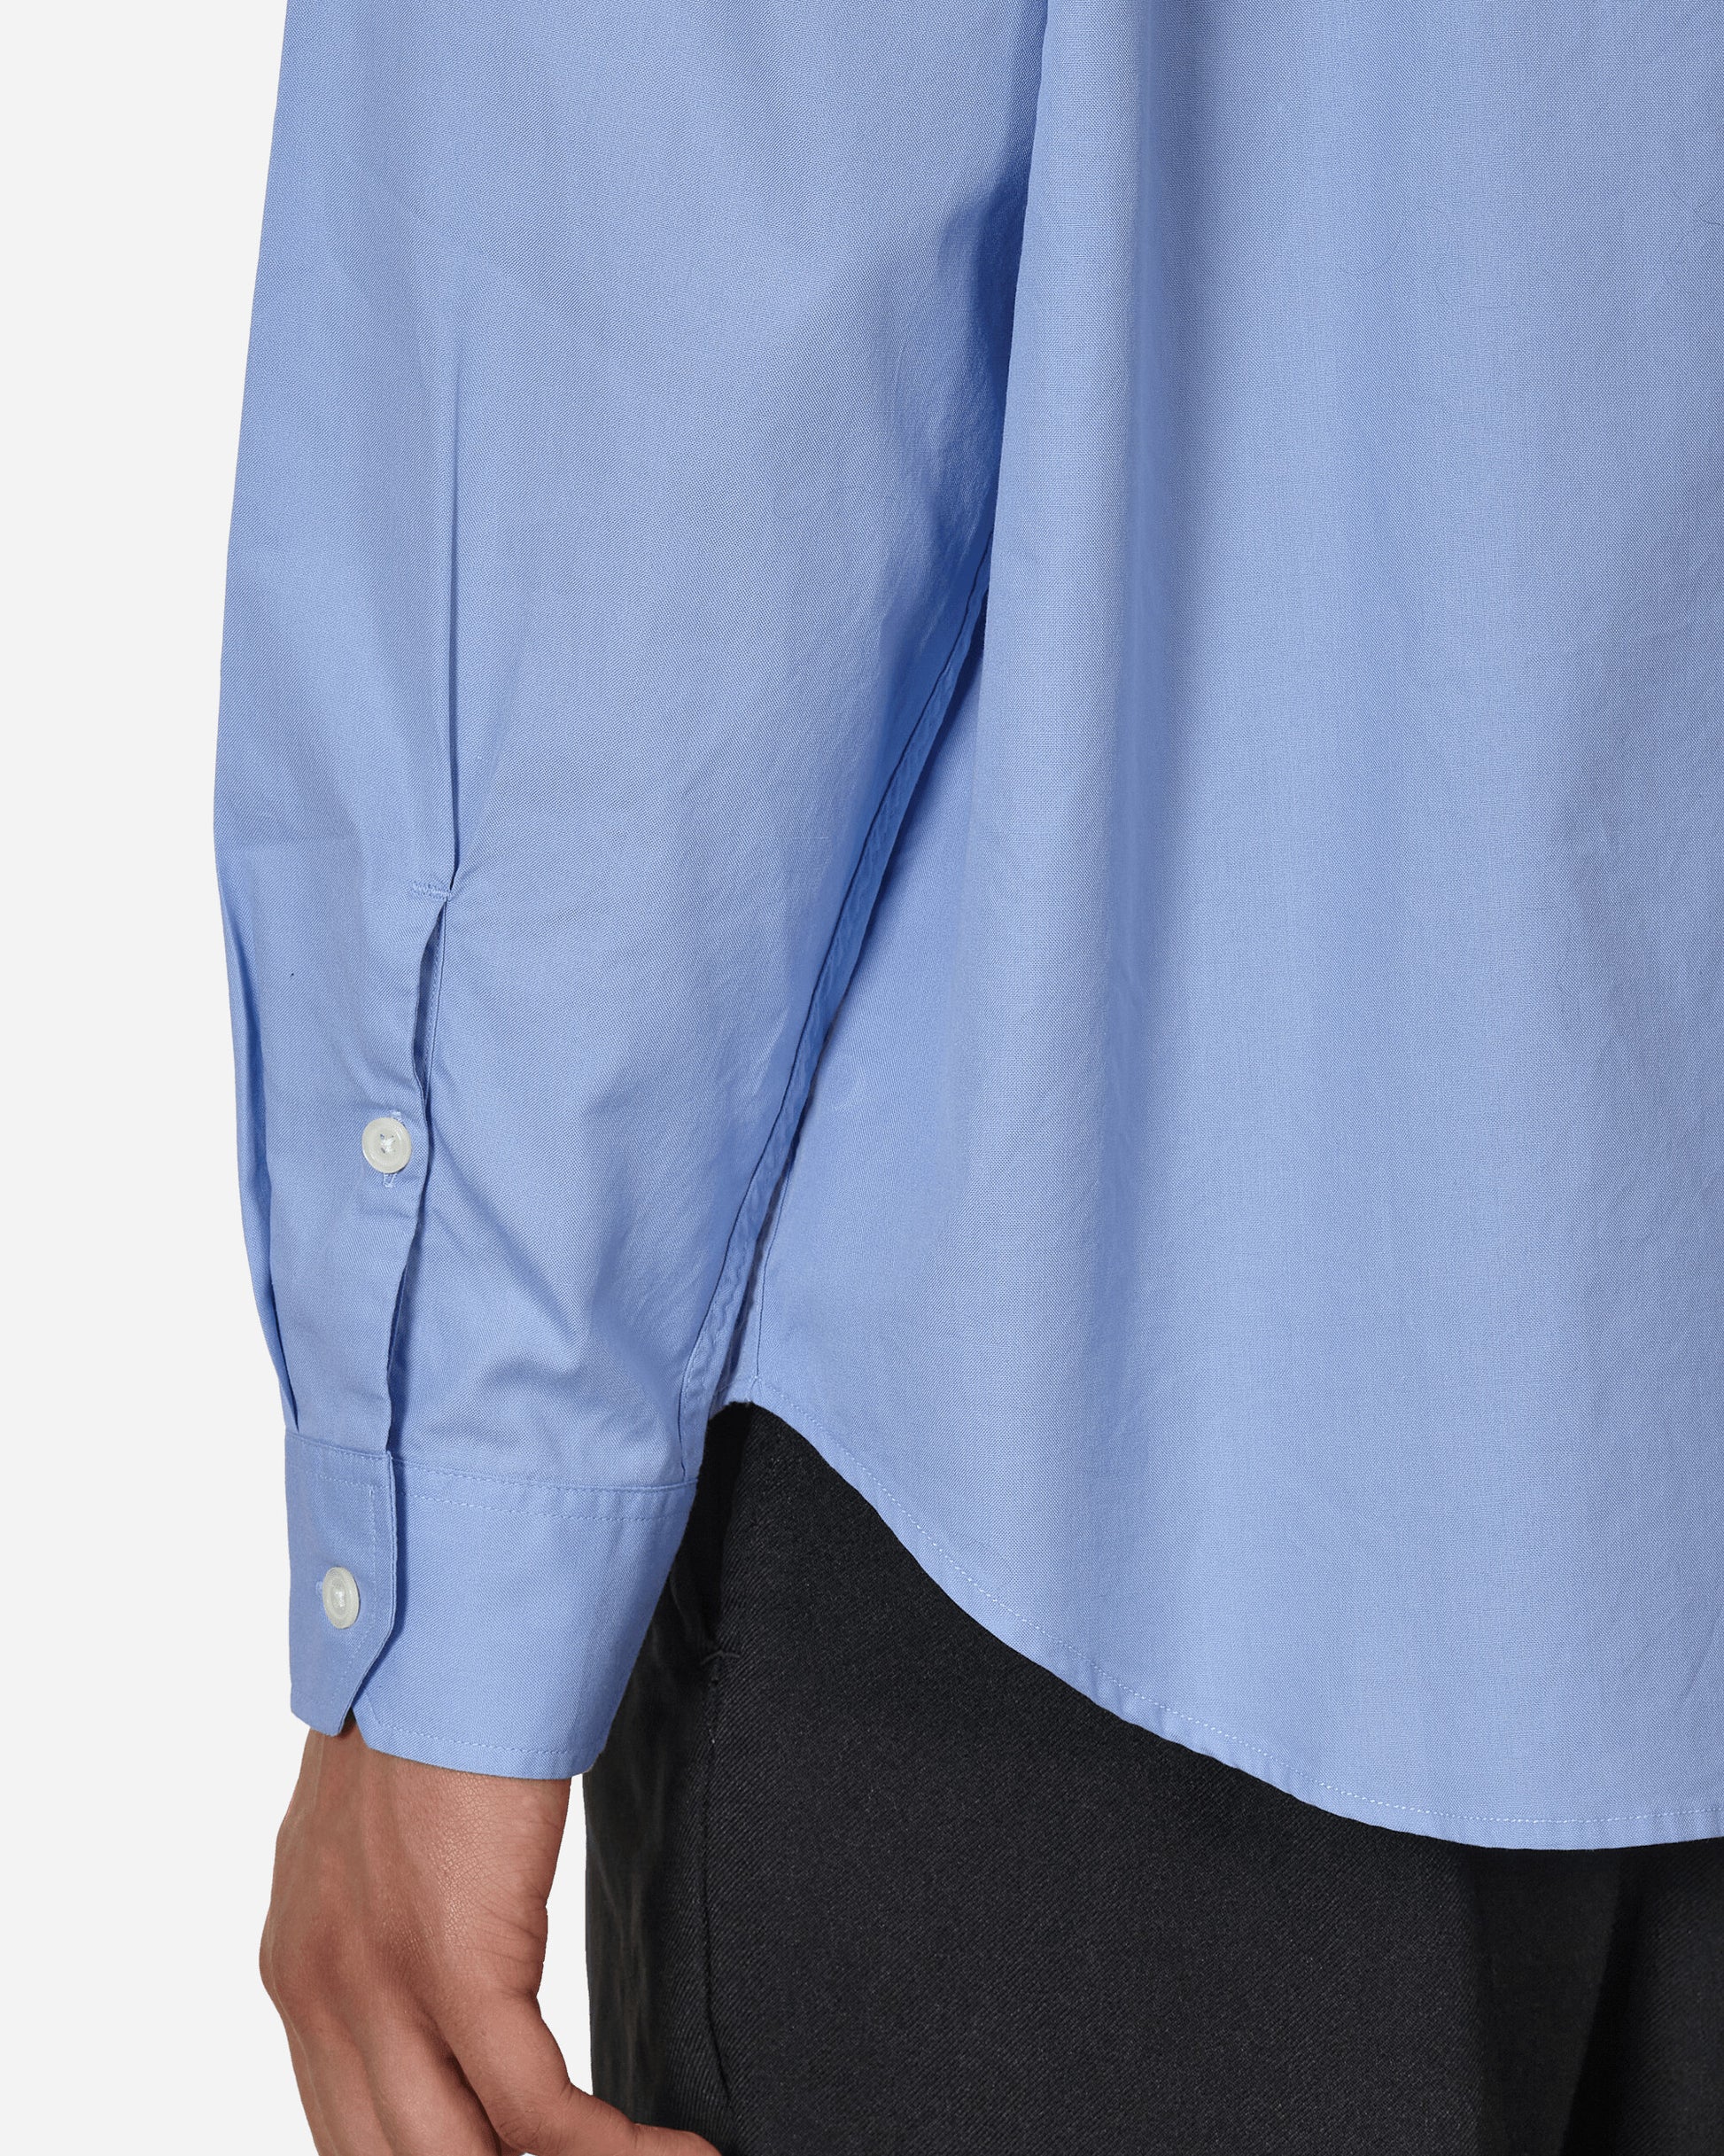 mfpen Generoius Shirt Blue Oxford Shirts Longsleeve Shirt M124-09  1